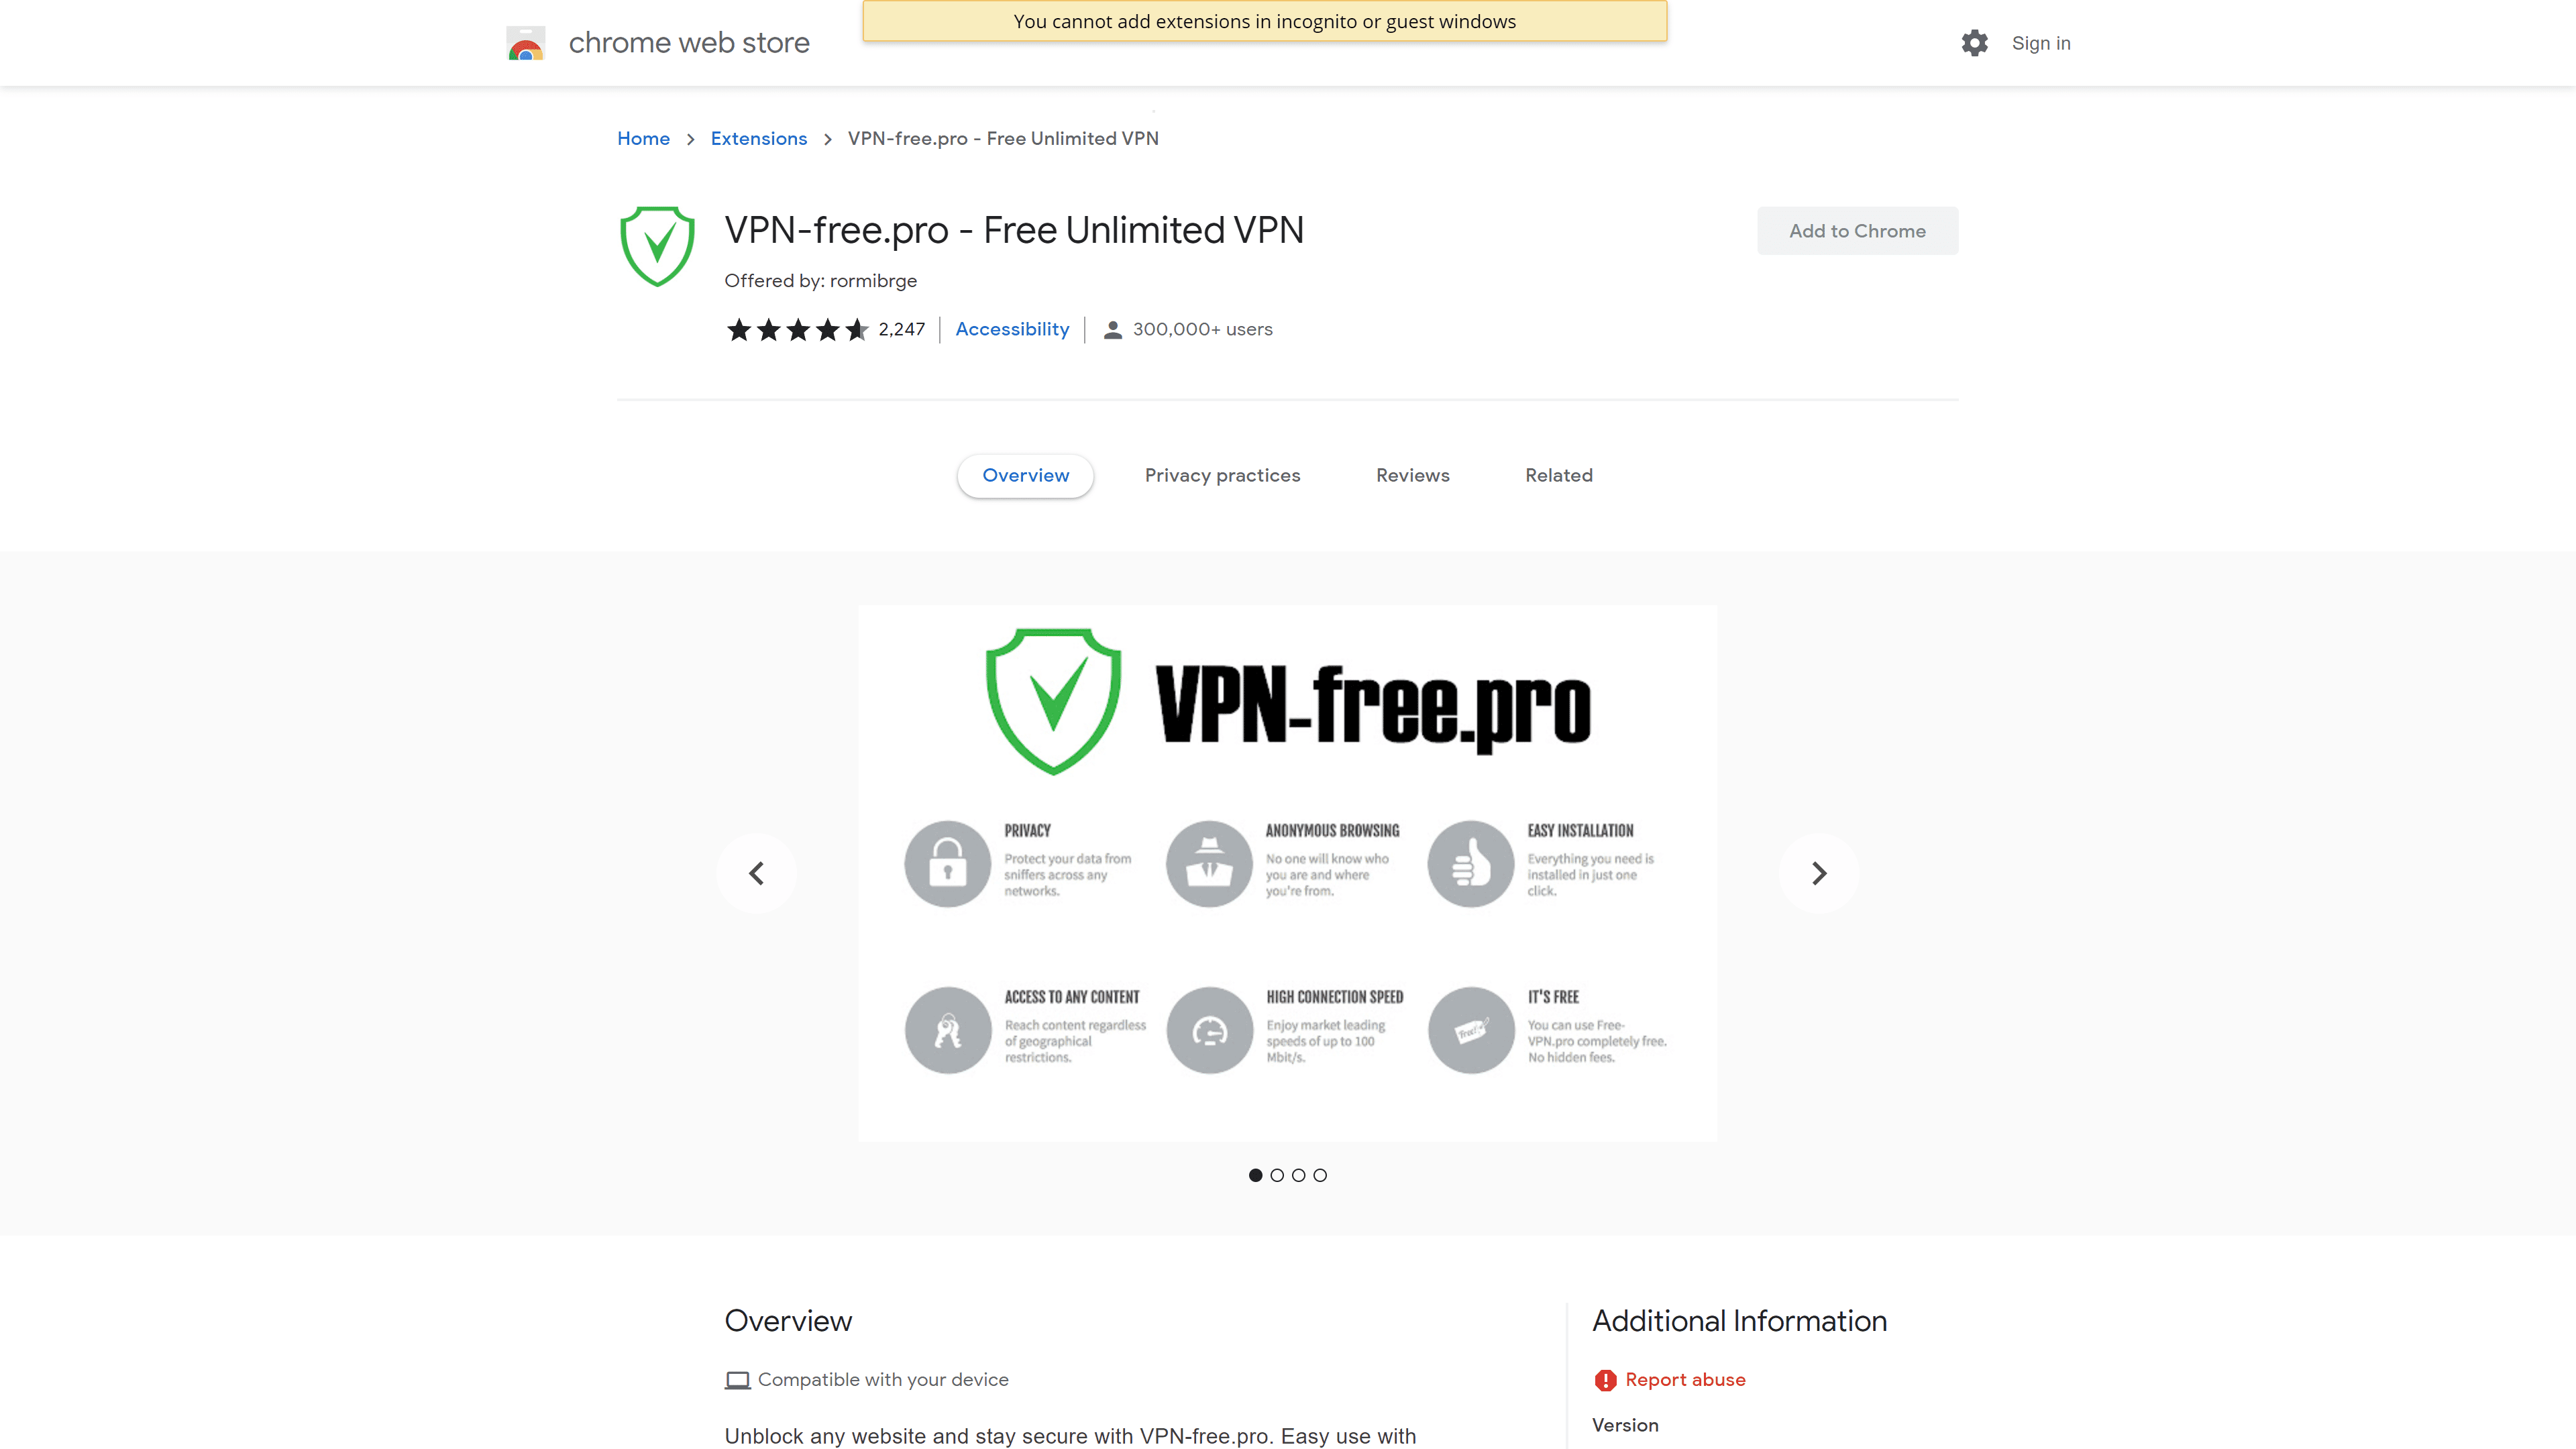 VPN free.pro